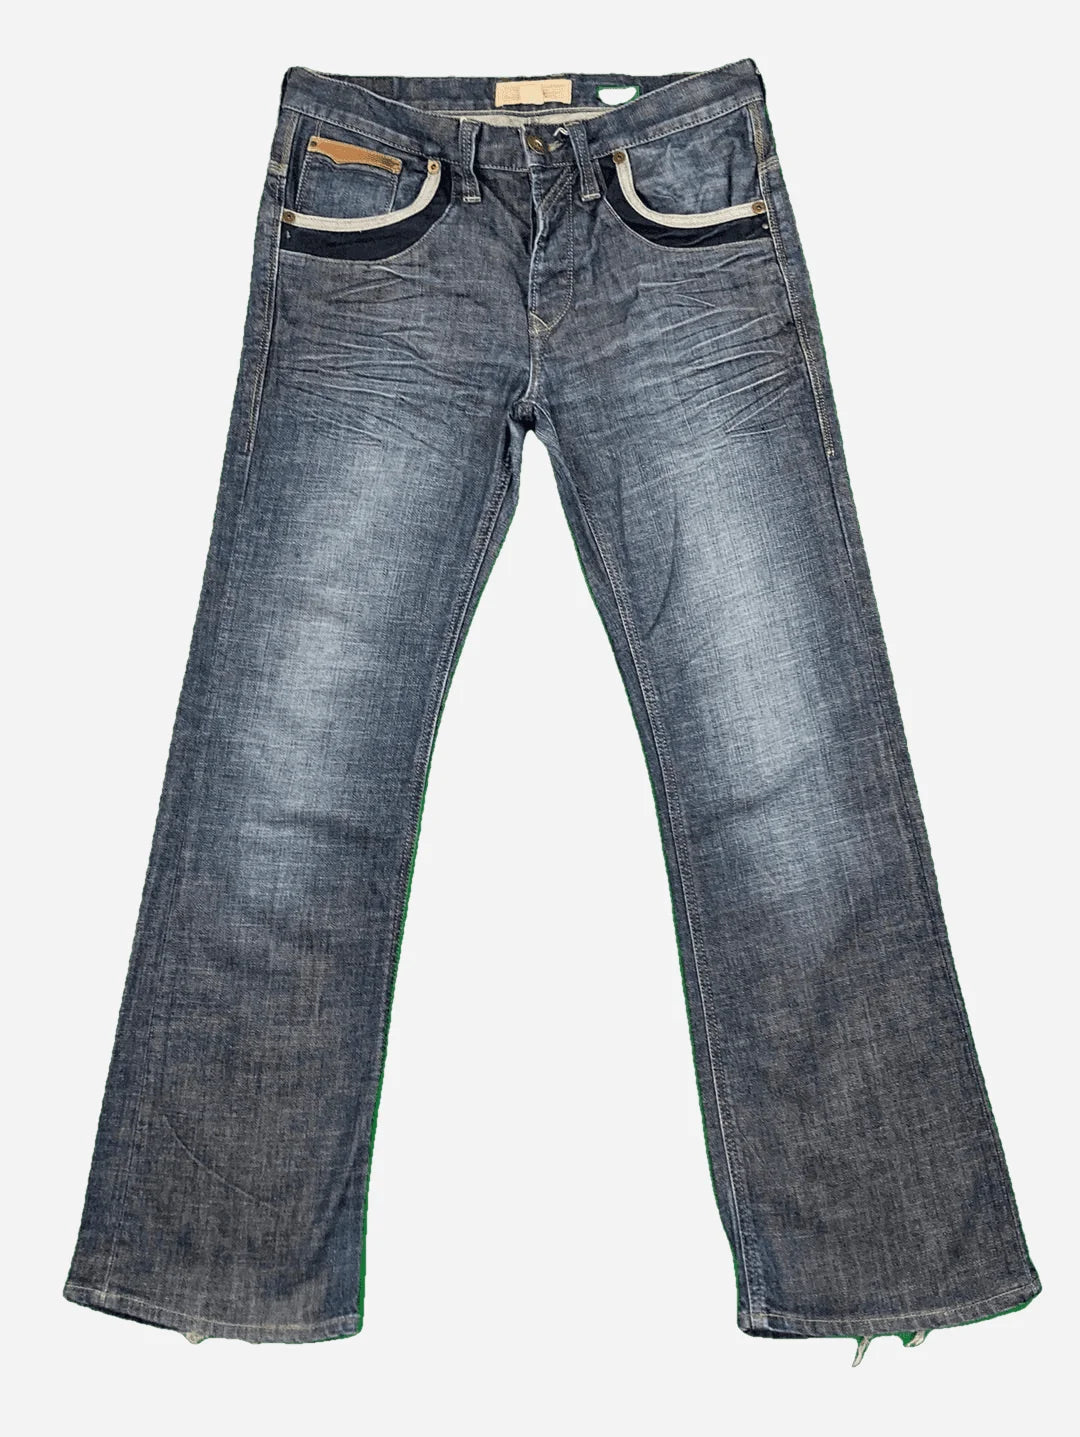 River Island Jeans 32/32 (M)